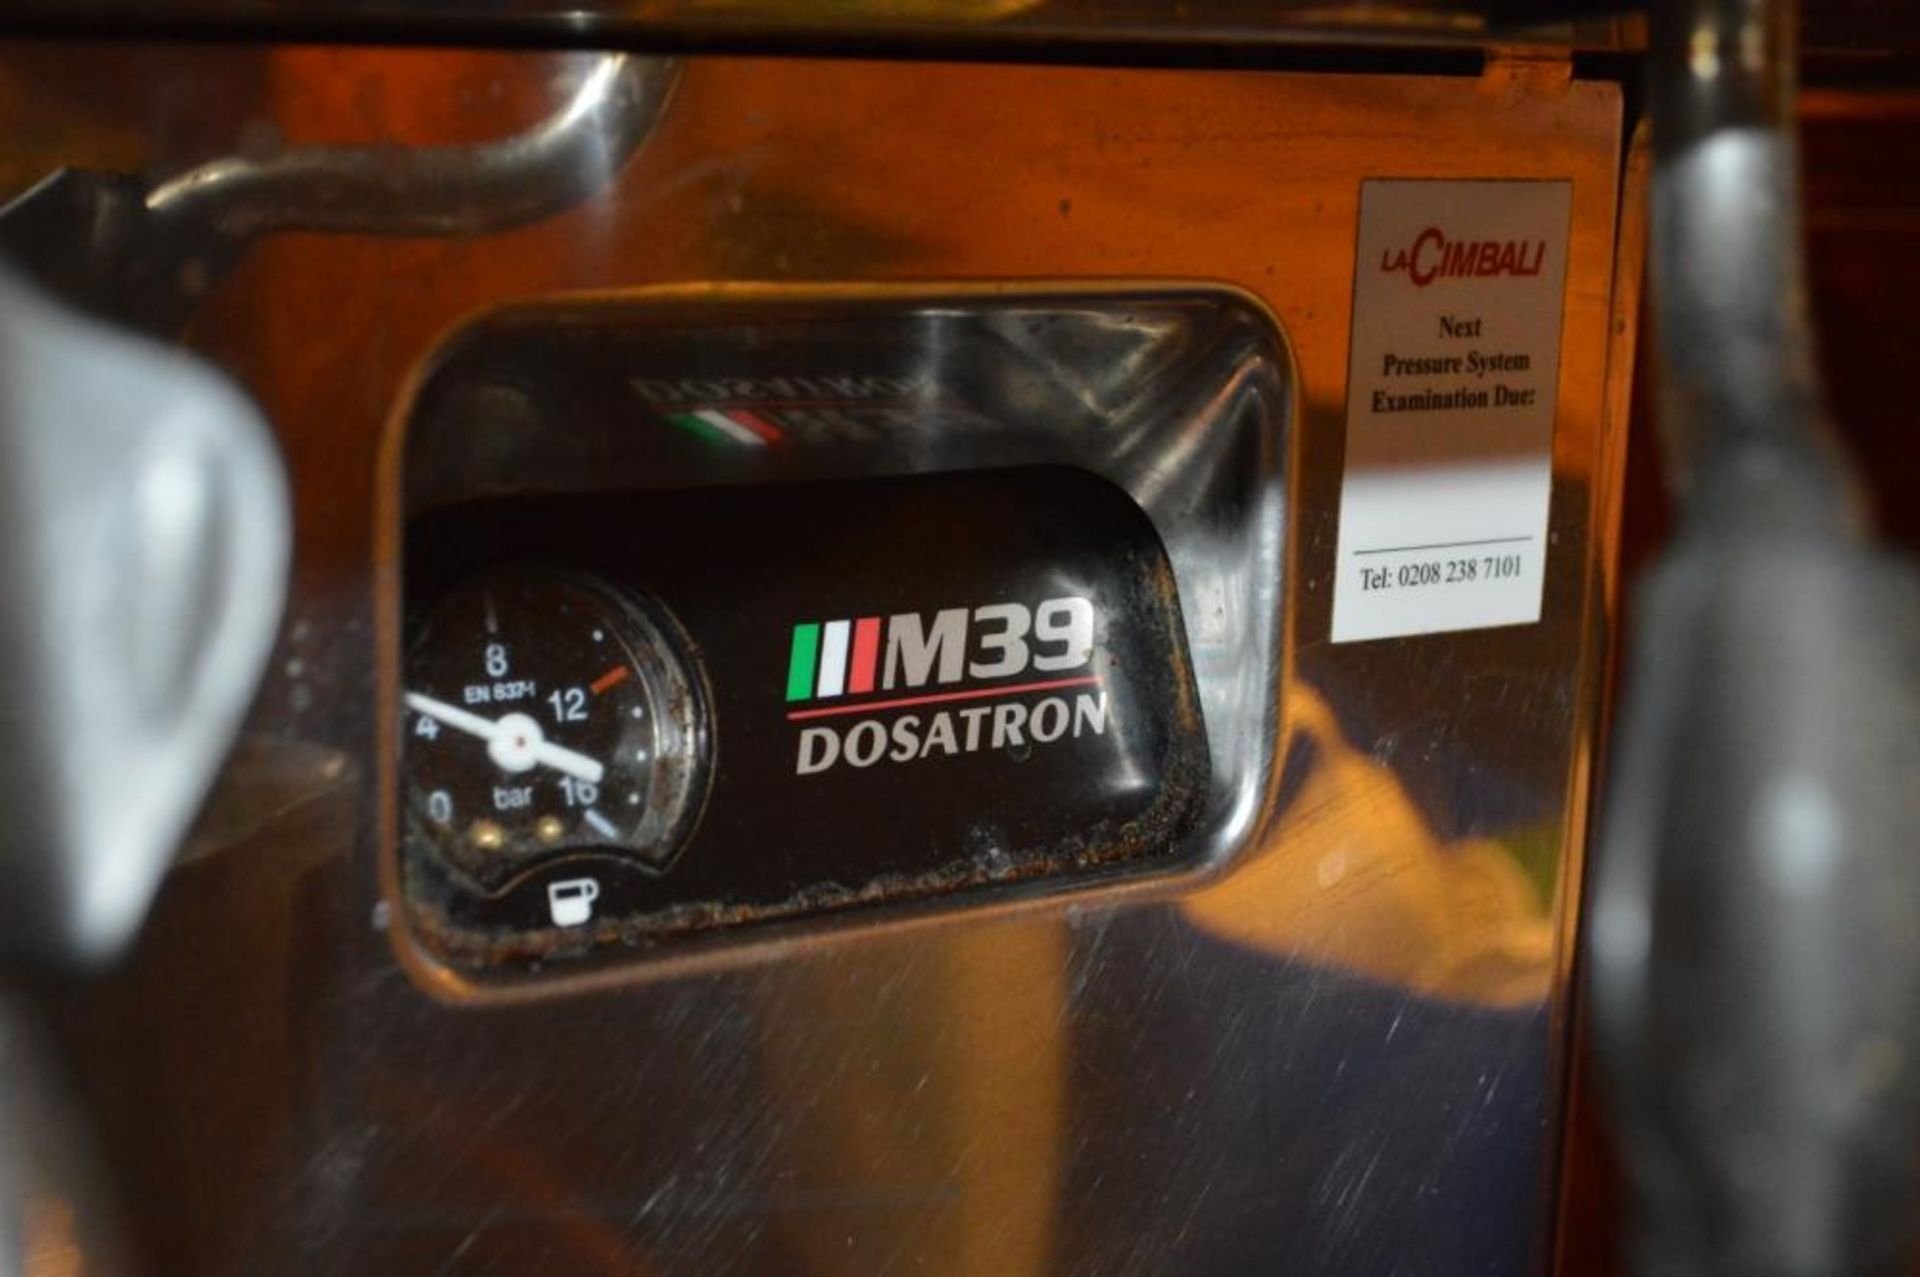 1 x La Cimbalie Espresso & Cappucino 3 Group Coffee Machine in Red - Model M39 DT3 TE - Ref FB115 - - Image 3 of 7